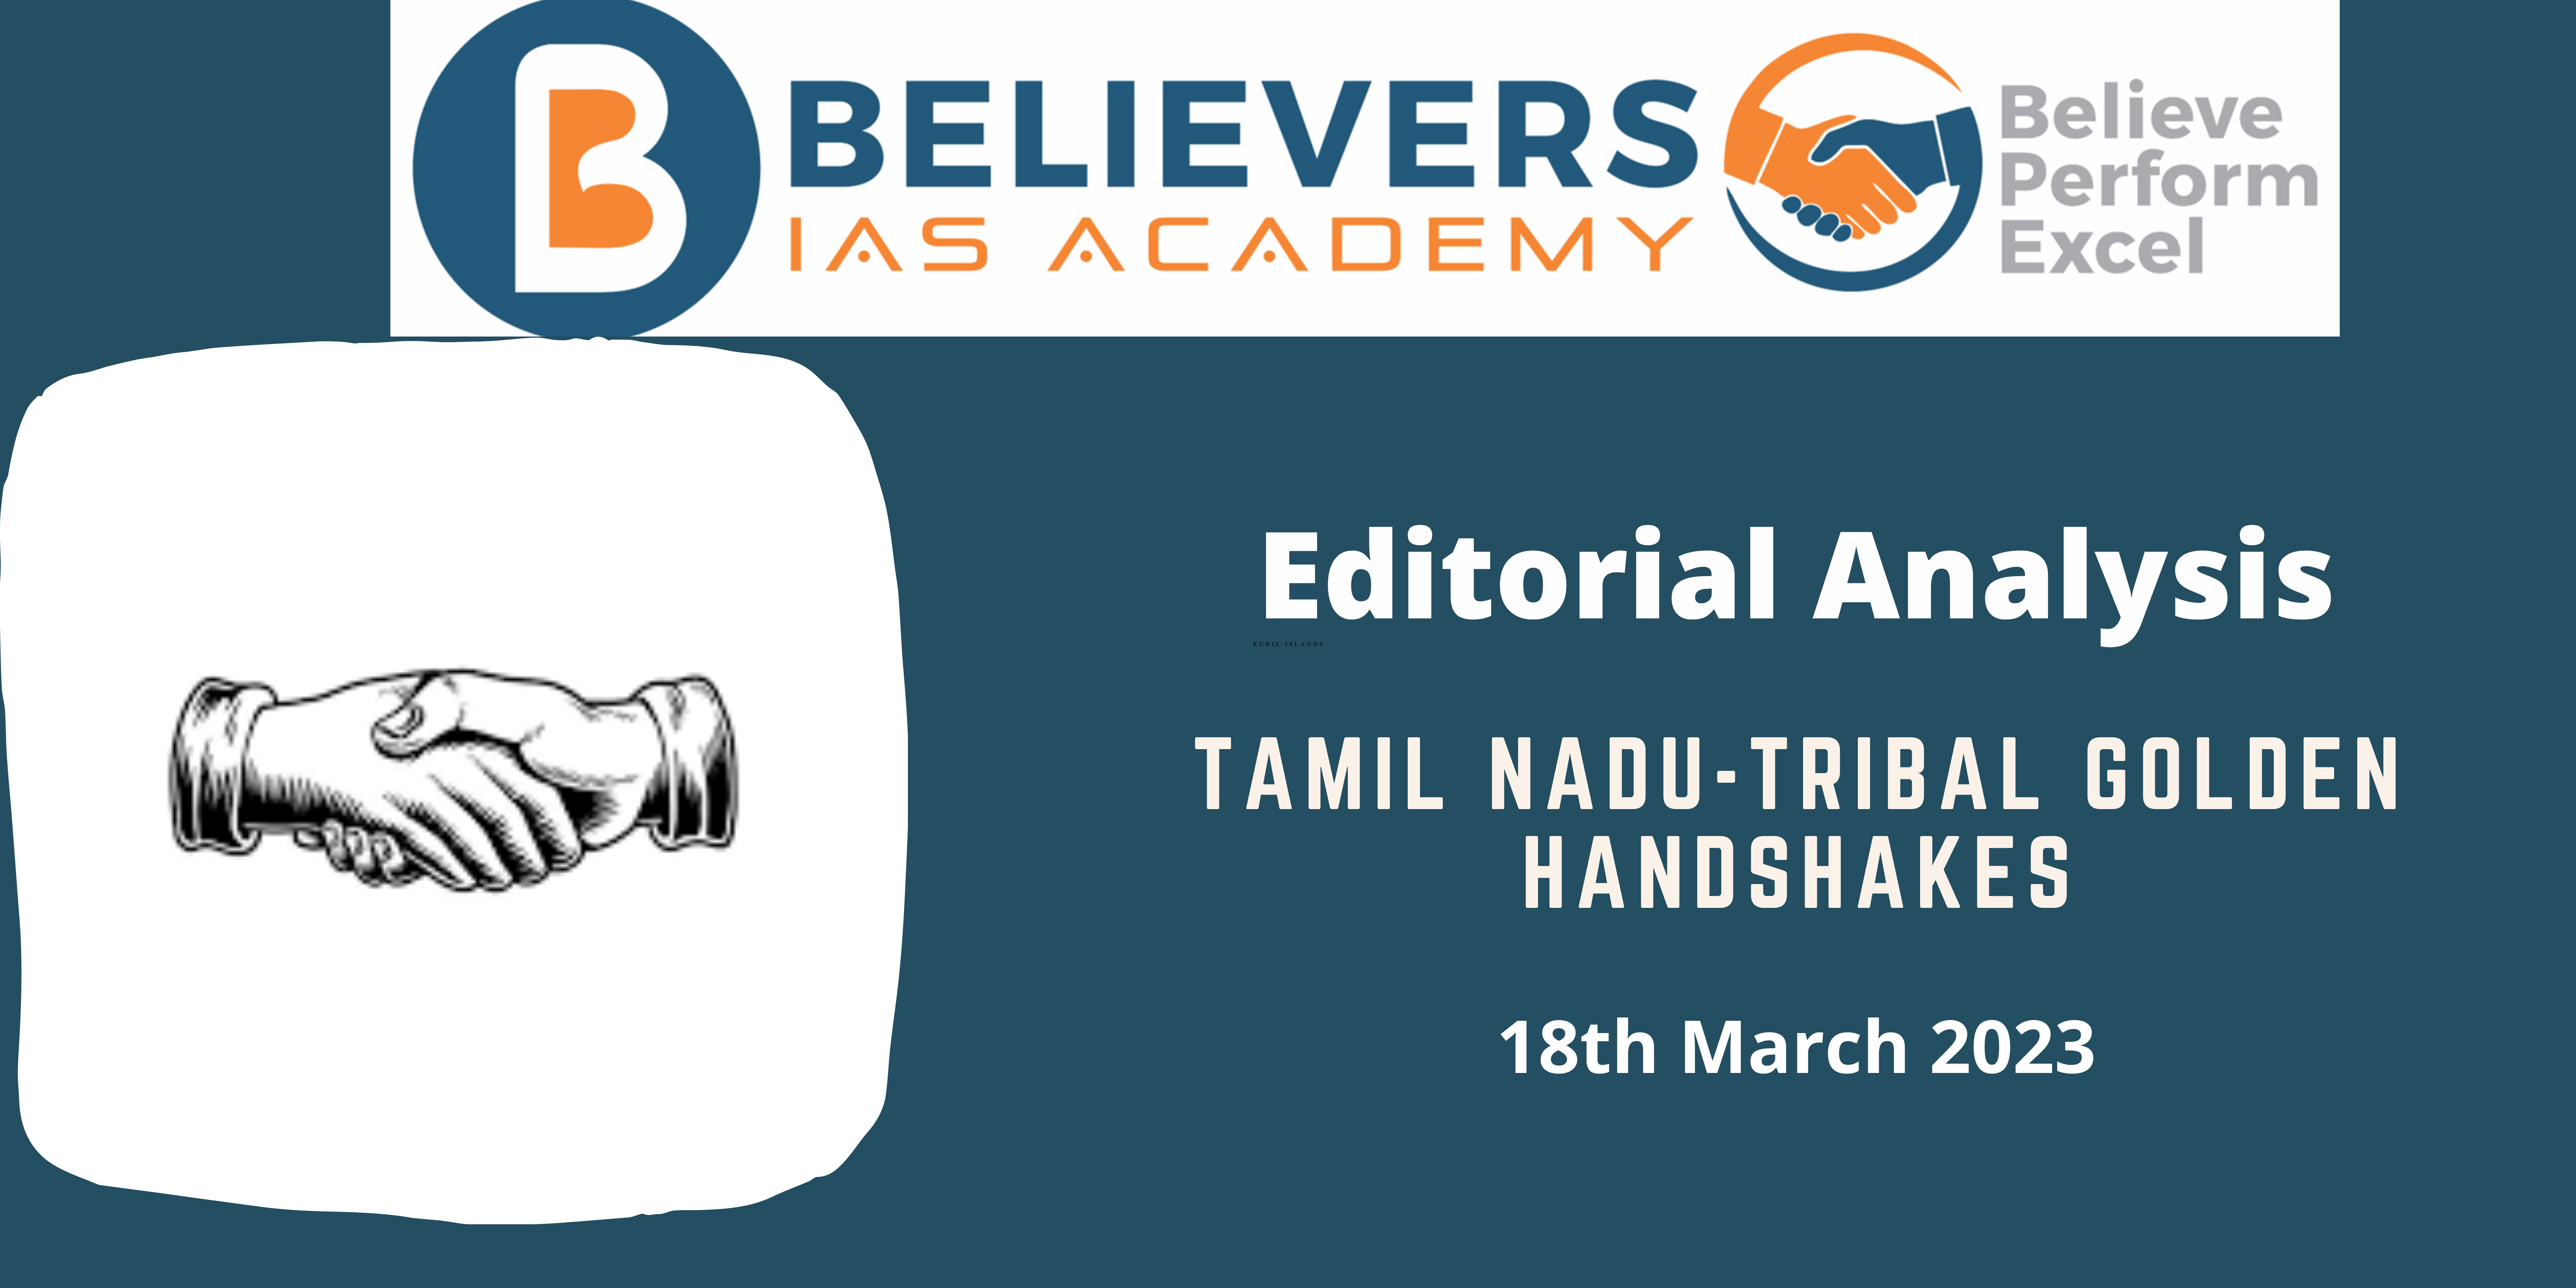 Tamil Nadu-Tribal Golden Handshakes